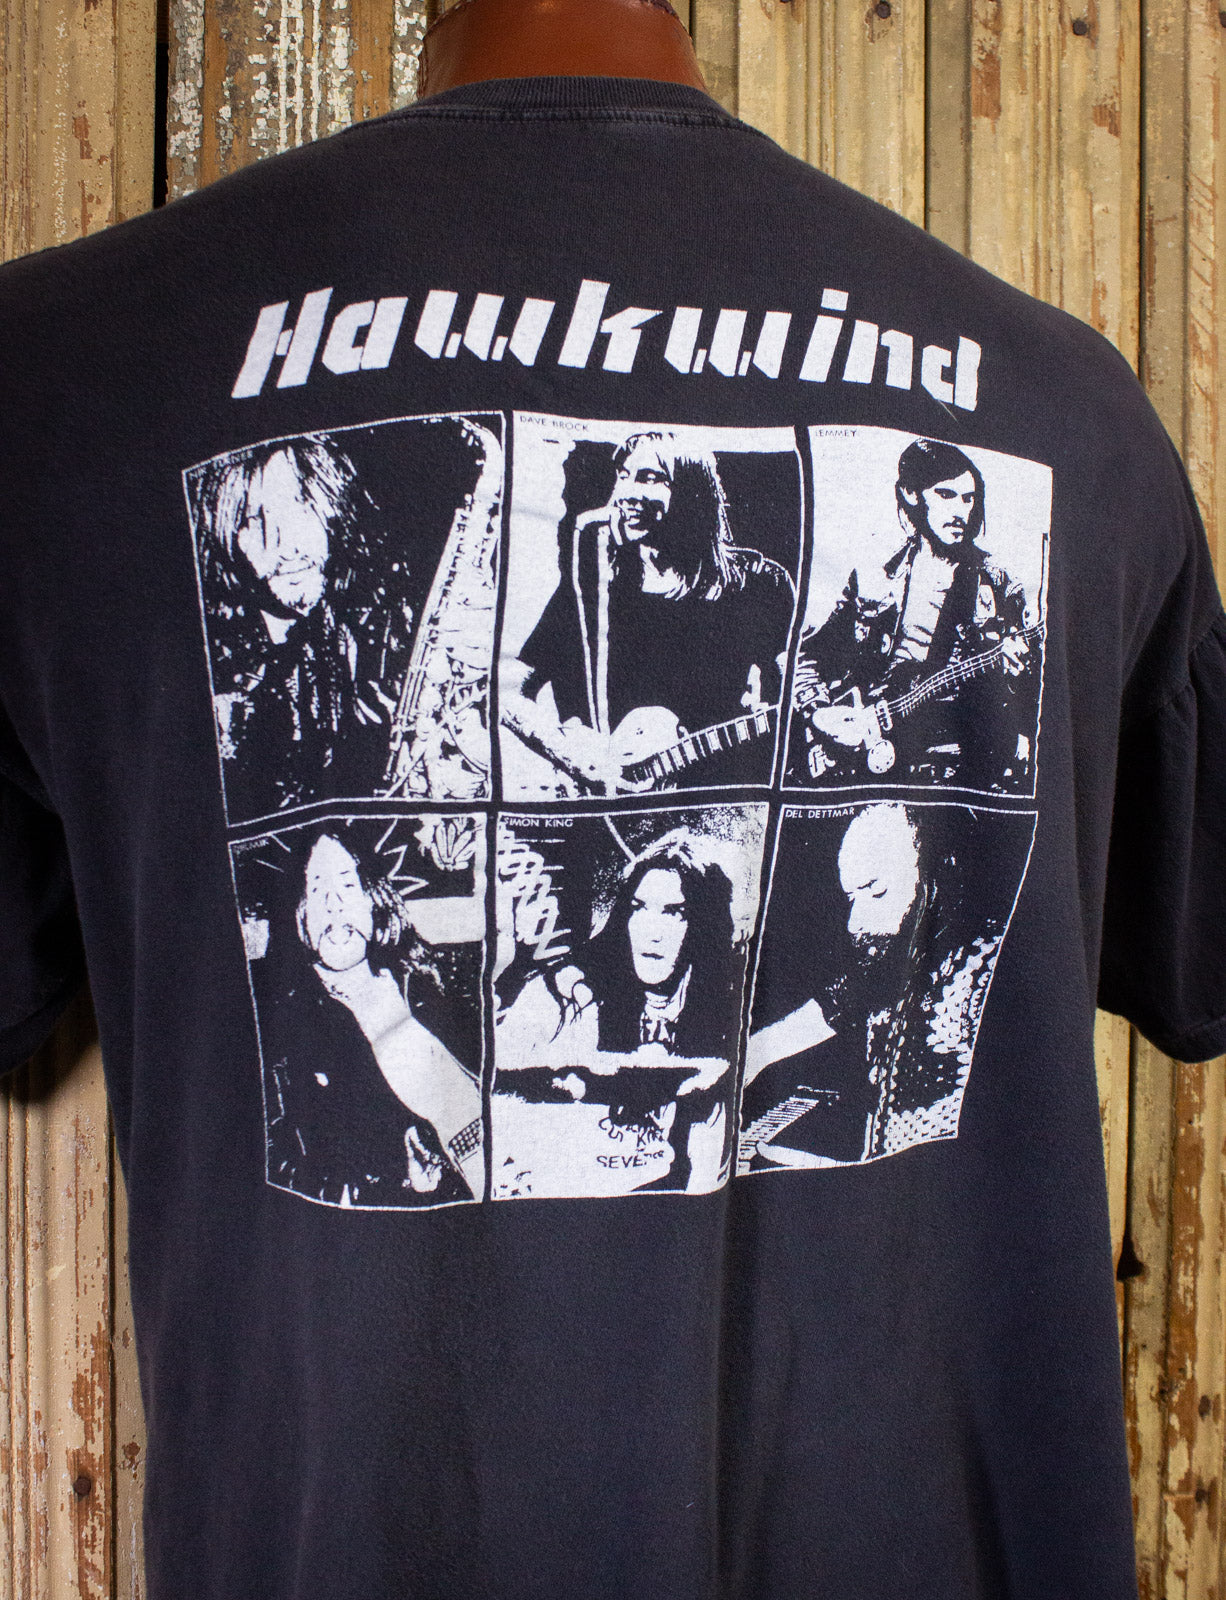 Vintage Hawkwind Doremi Fasol Latido Concert T Shirt 90s Black 2XL